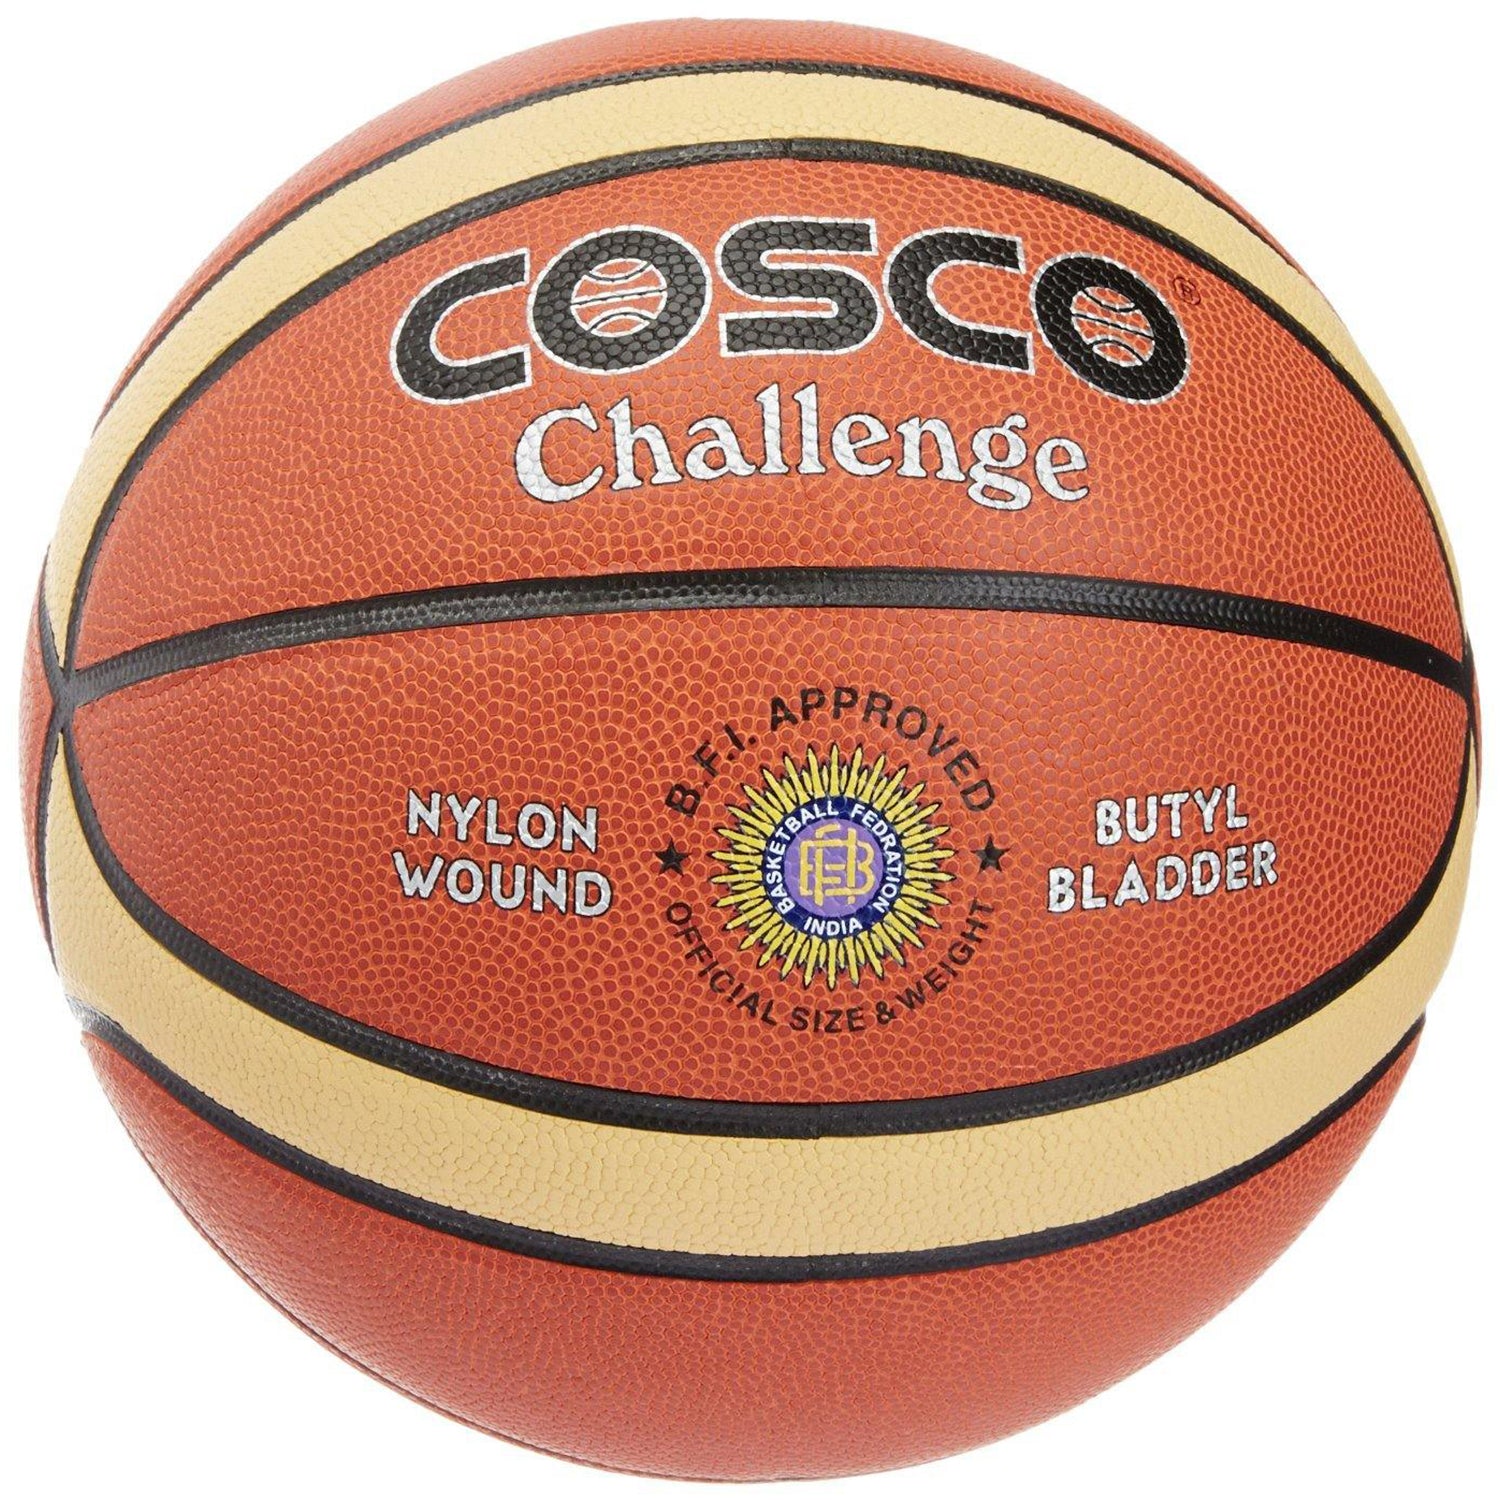 Cosco Challenge Basket Ball, Size 7 (Orange) - Best Price online Prokicksports.com